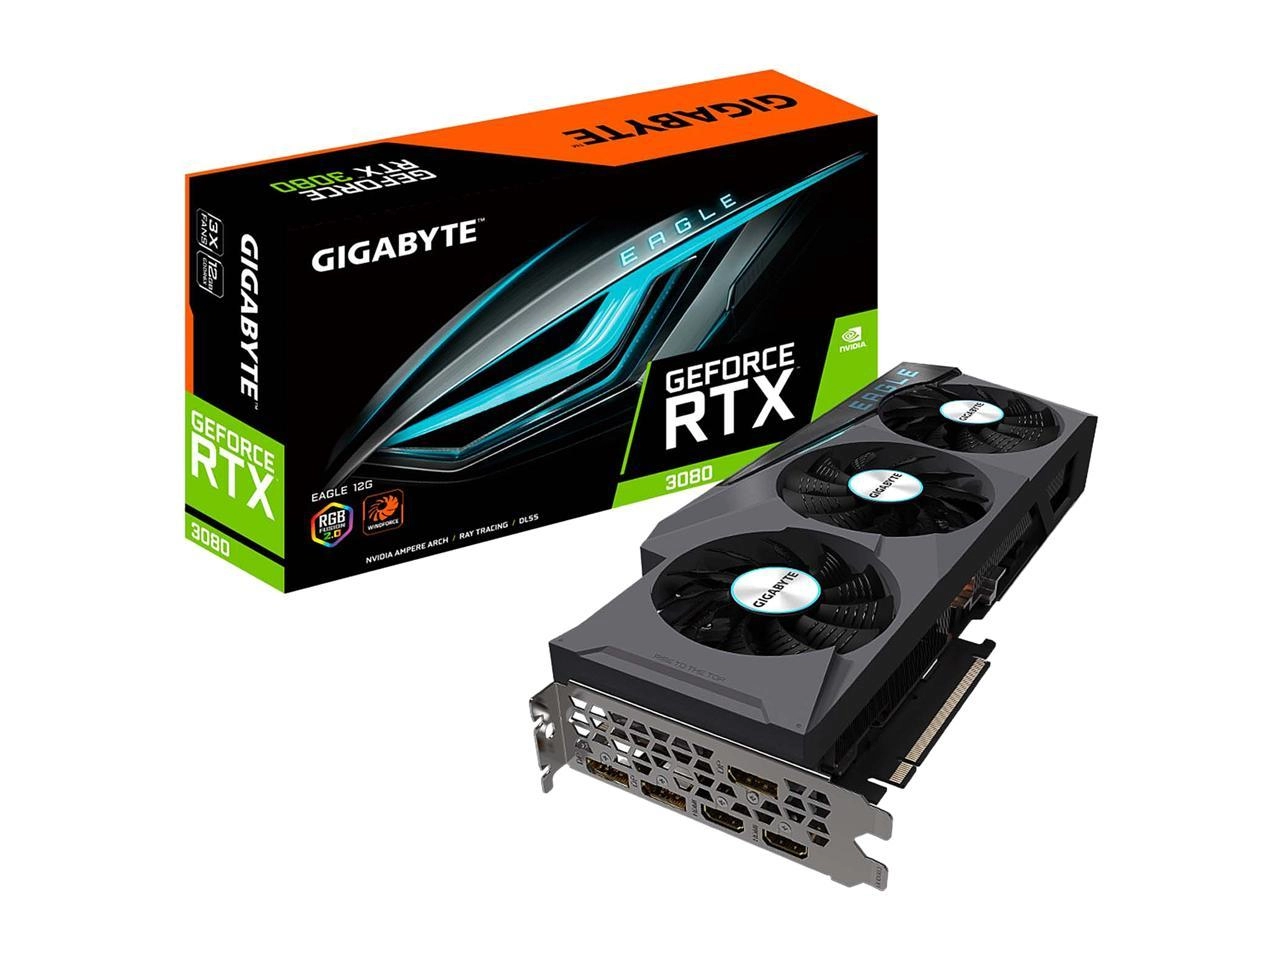 GIGABYTE GeForce RTX 3080 EAGLE 10G Package